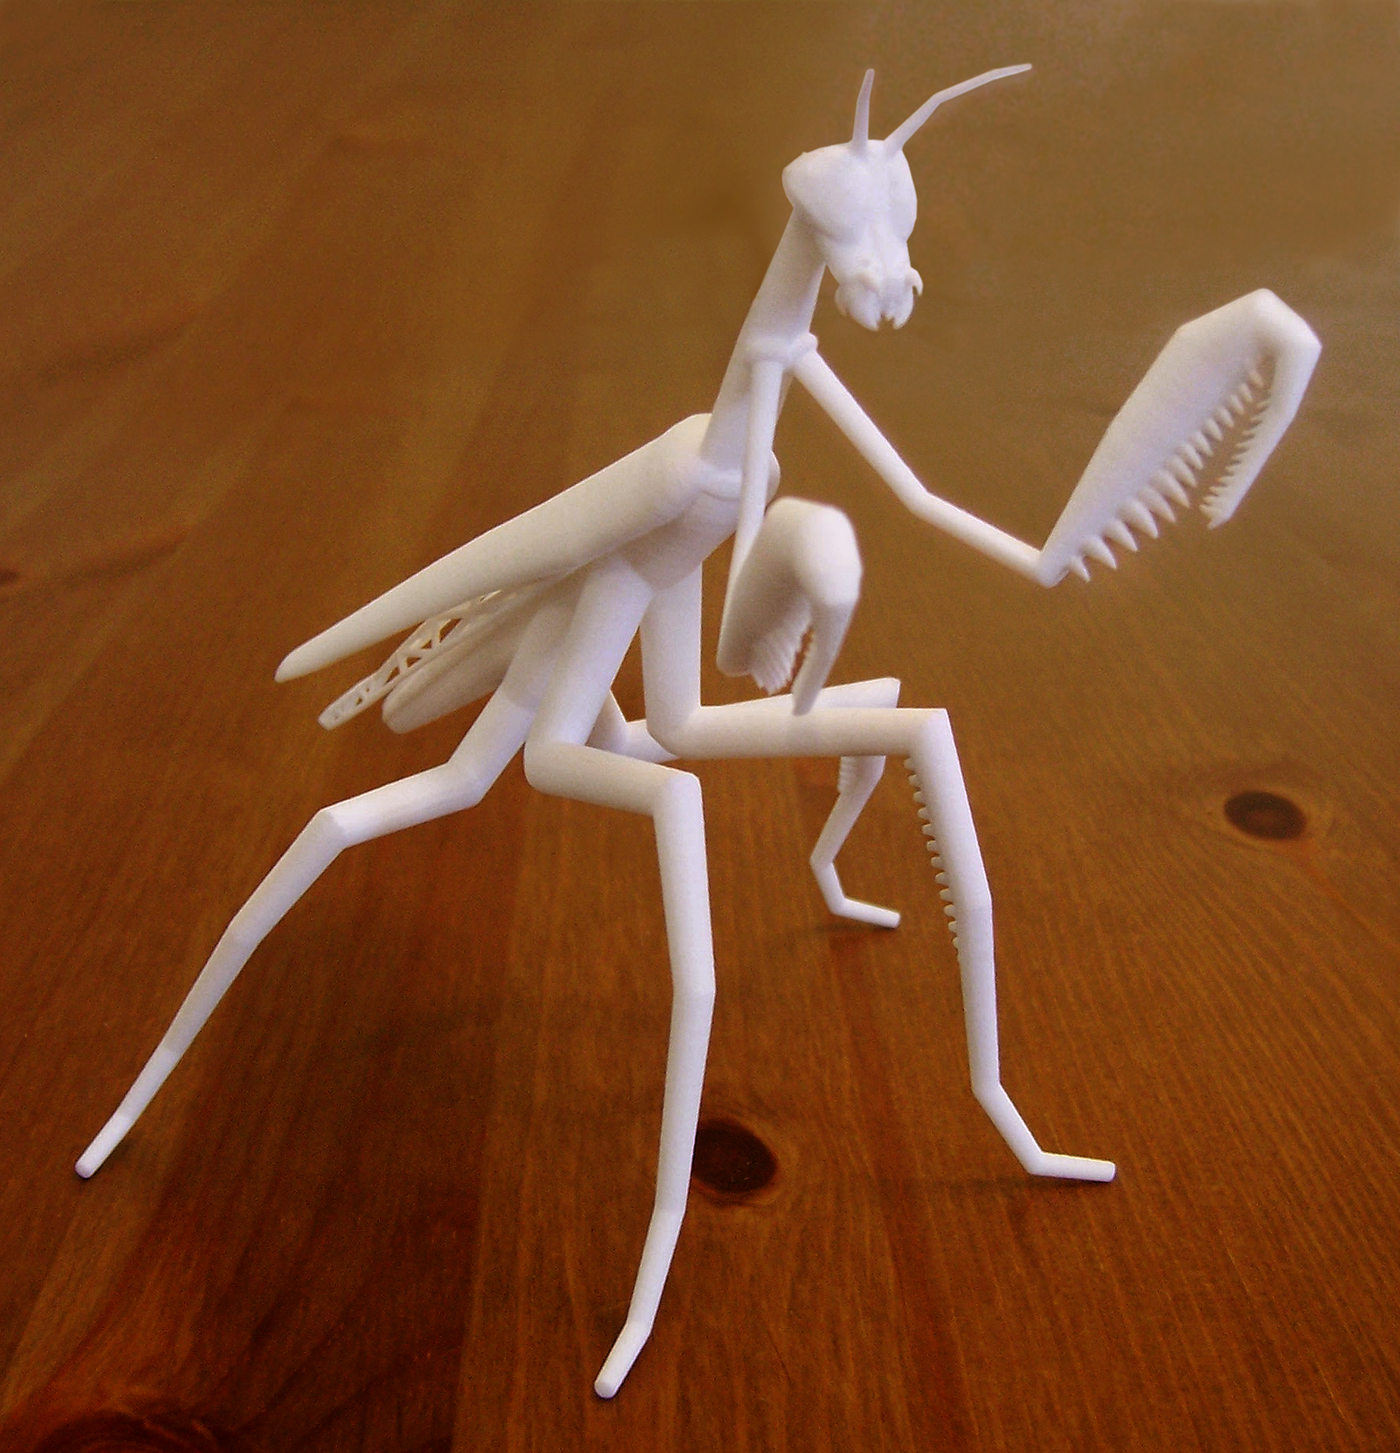 Mantis On The Ground 3D Print Model 1/6 Unpainted Unassembled GK 2 Version H12cm